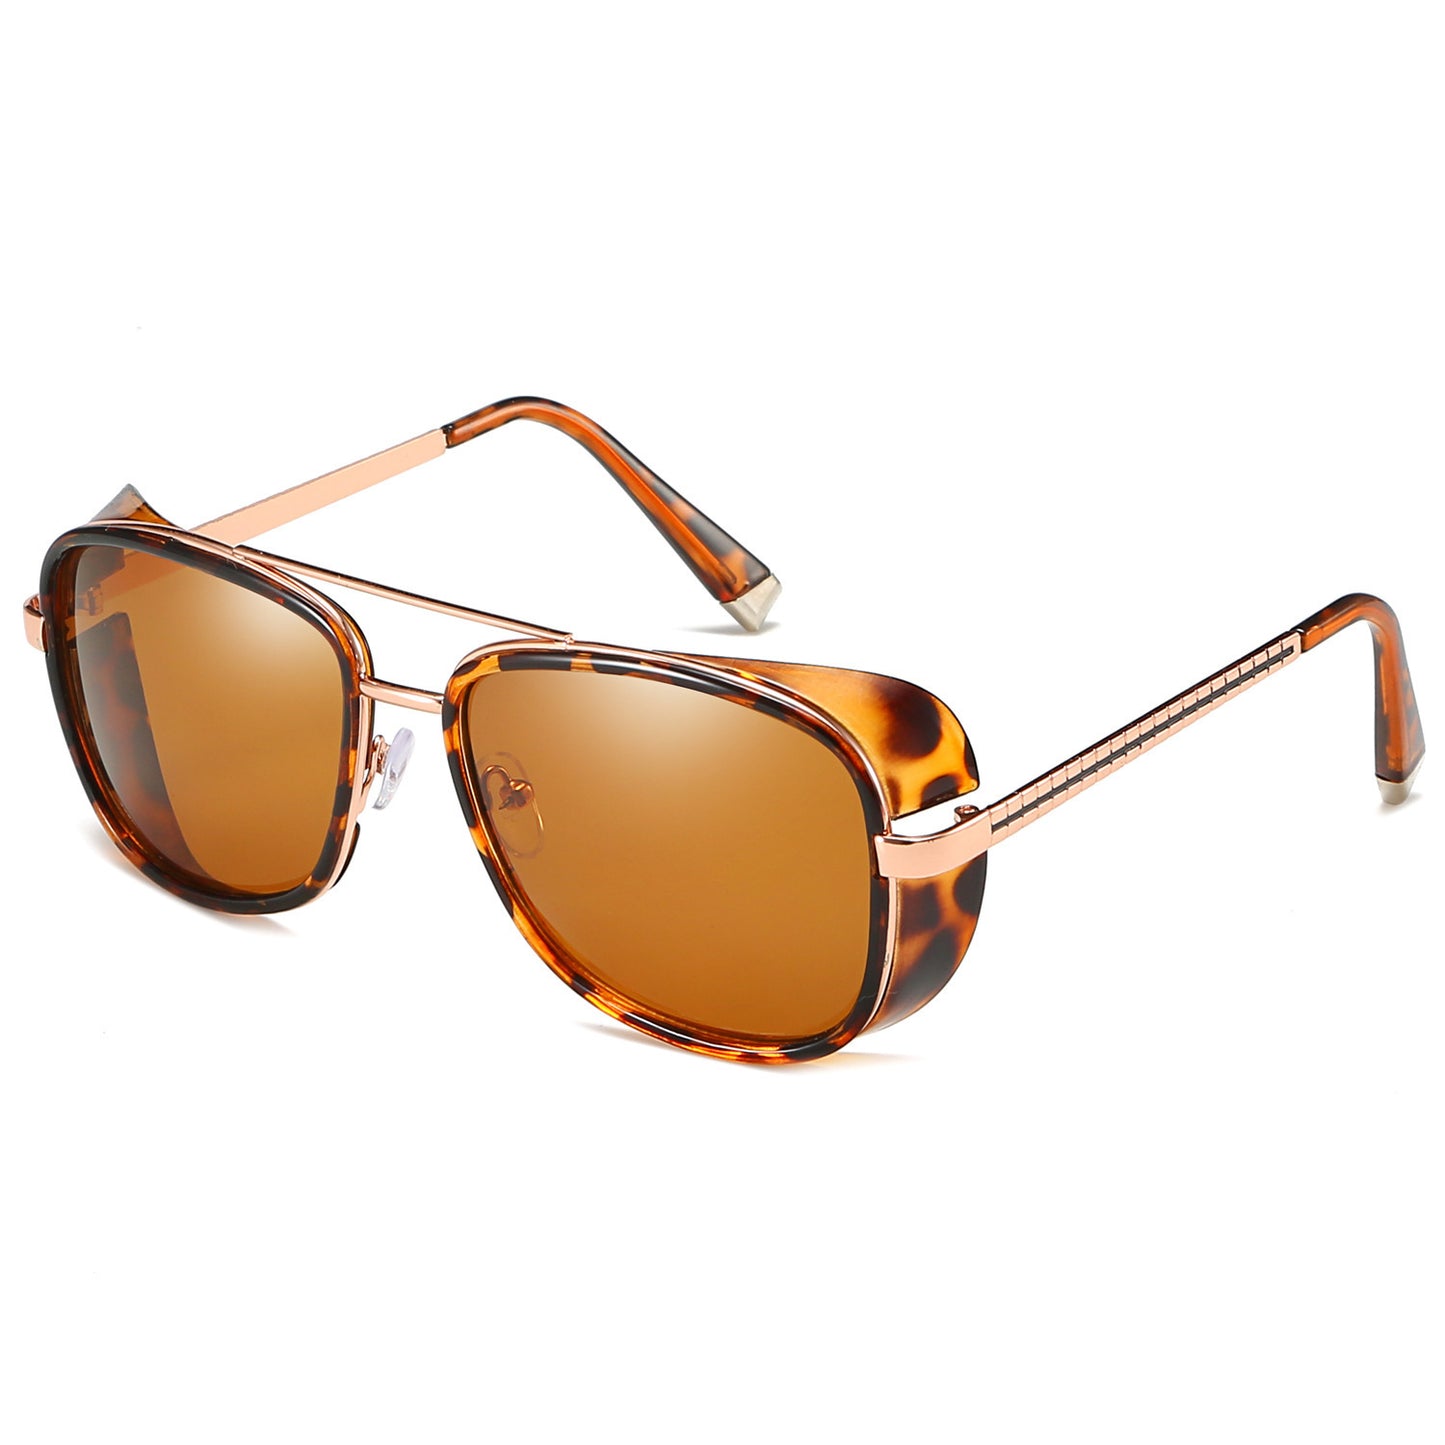 Tidal Retro Sunglasses for Men and Women